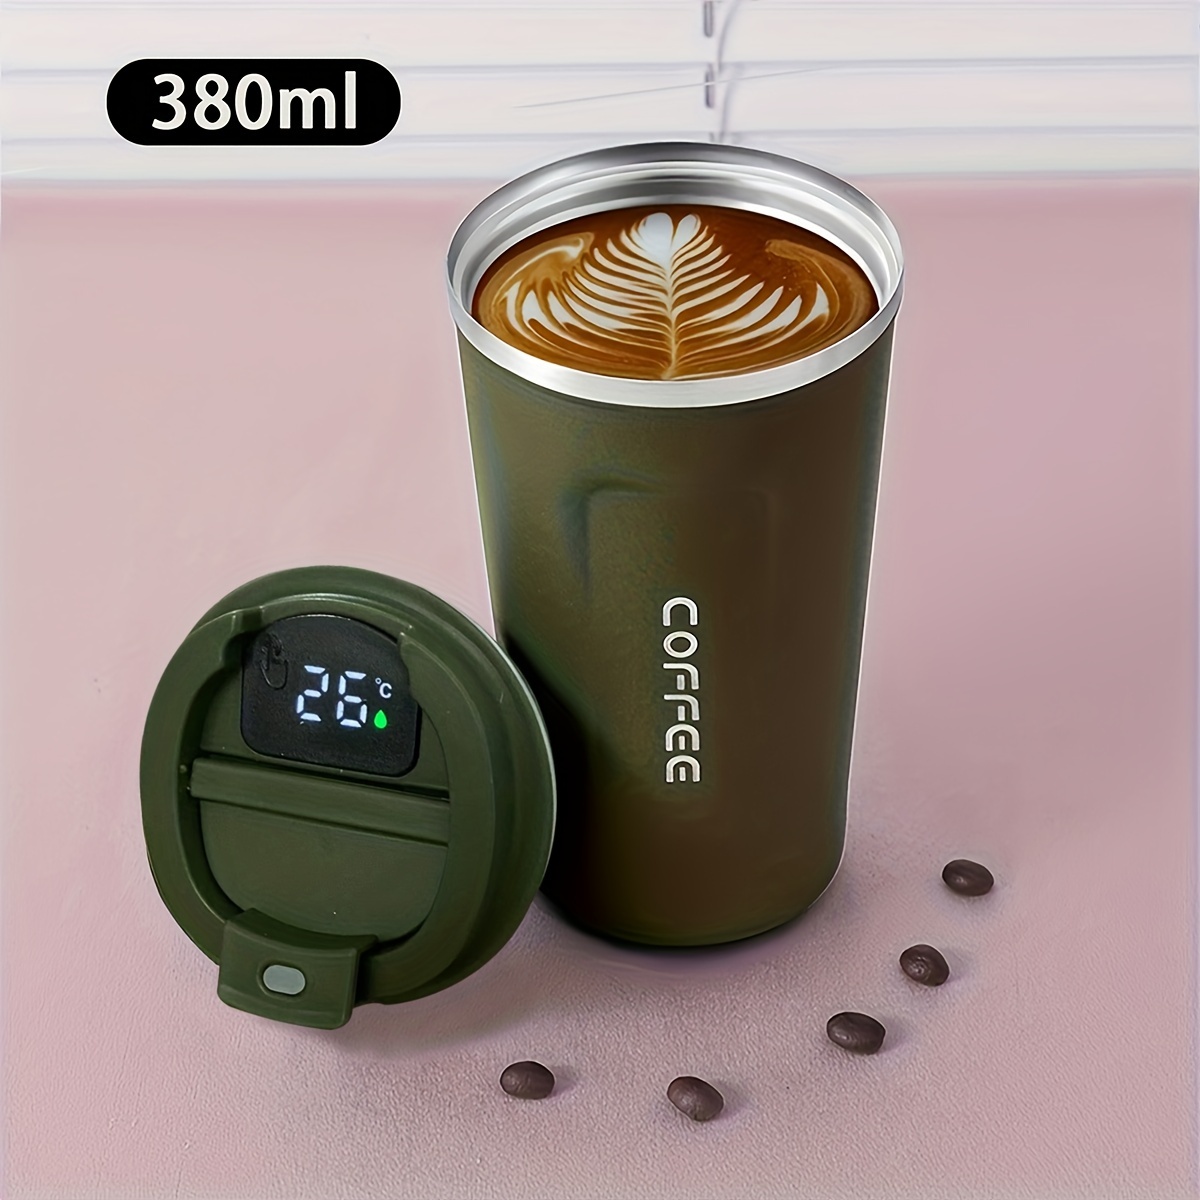 304 Stainless Steel Coffee Mug With Temperature Display - Vacuum